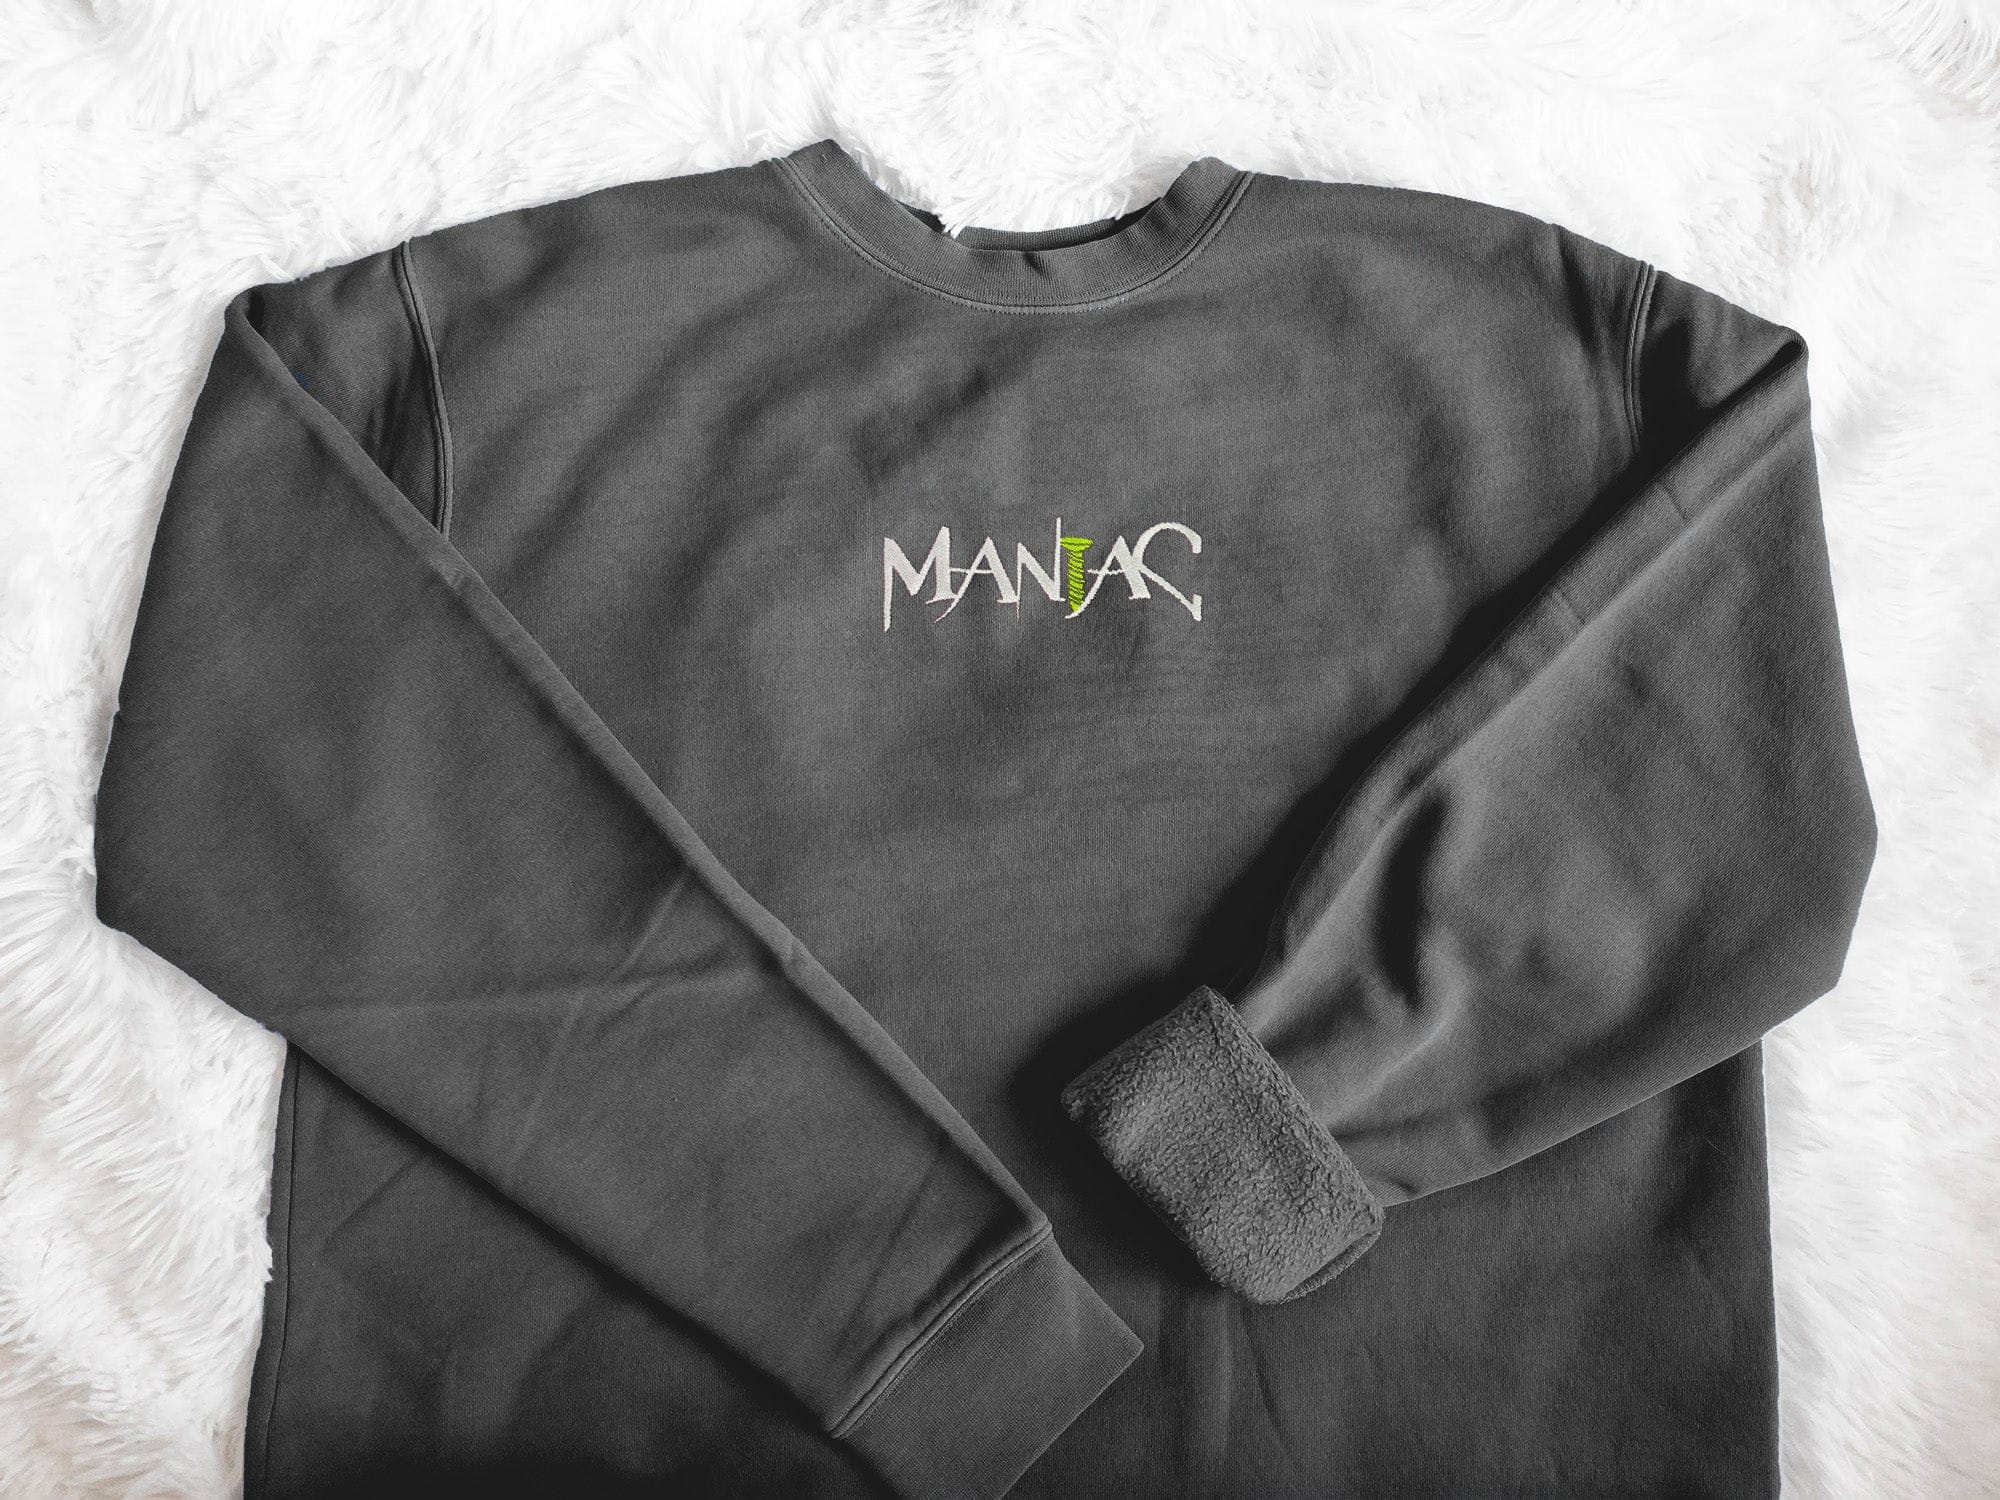 Maniac Embroidery Shirts and Sweatshirts